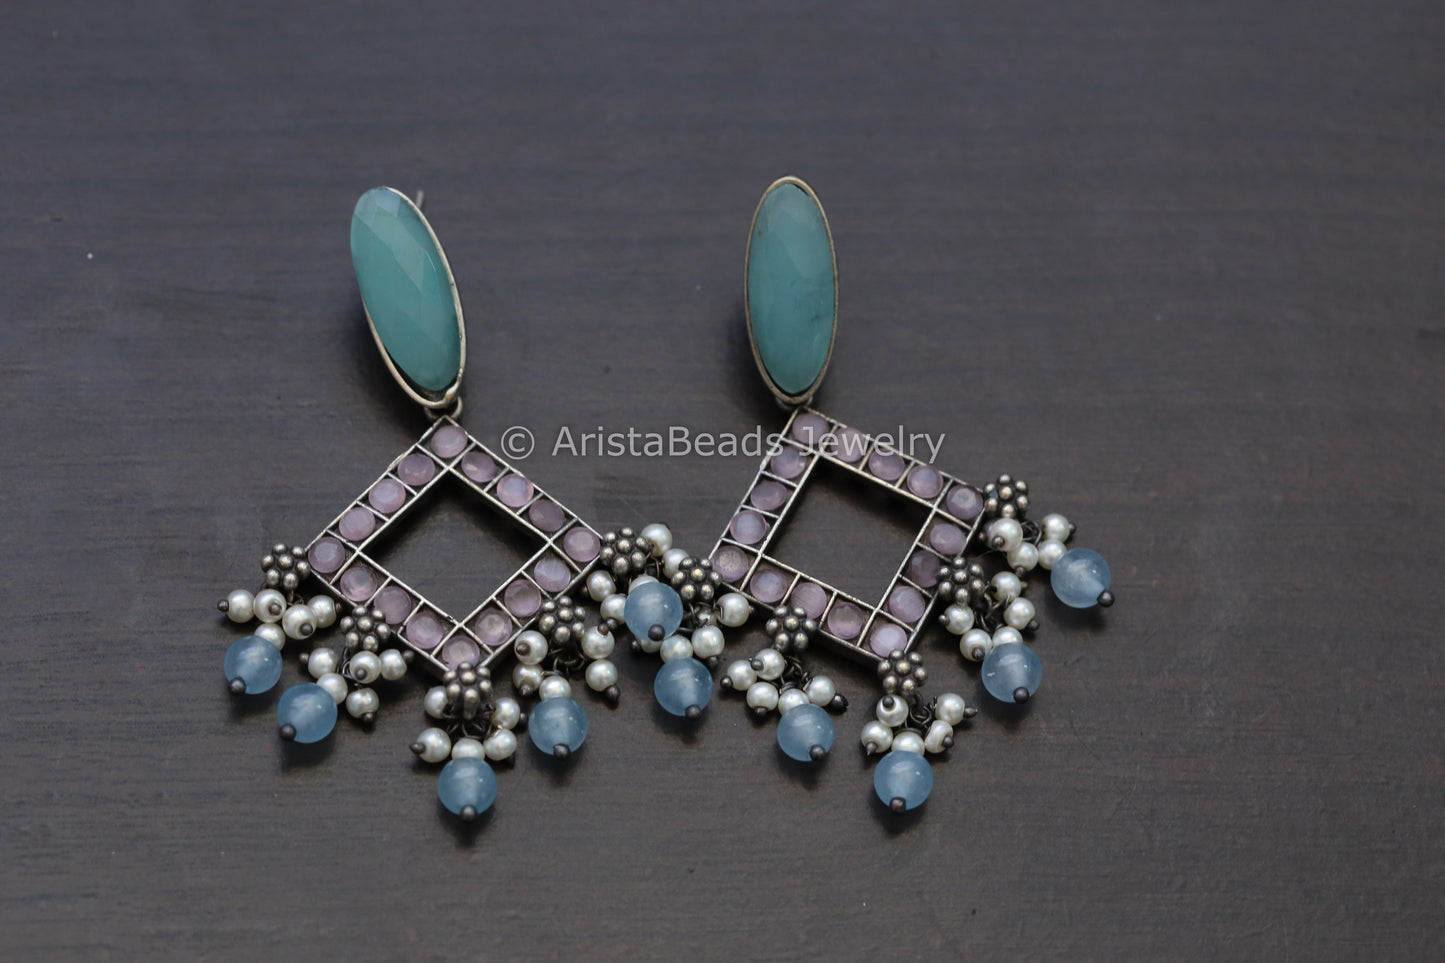 Monalisa Stone Earrings - Ice Blue